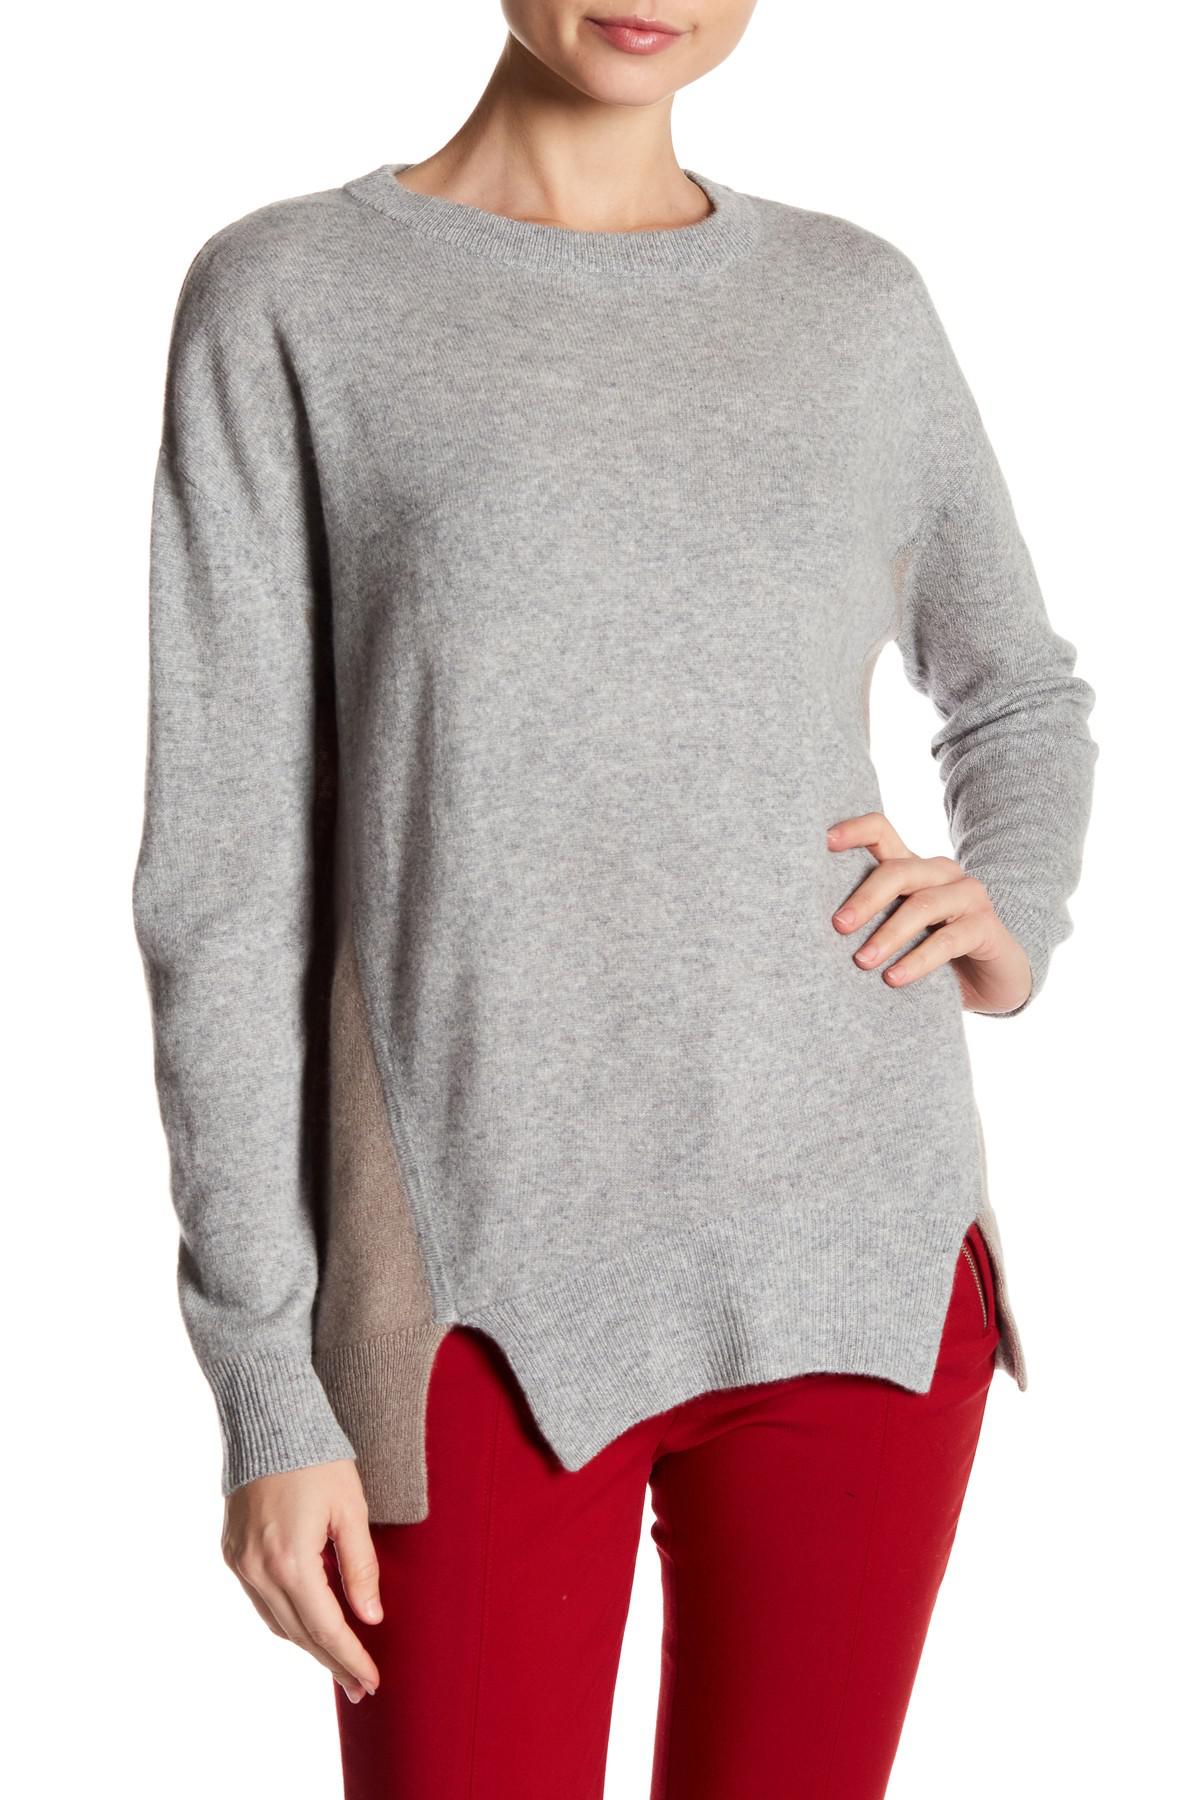 Lyst - Philosophy Cashmere Colorblock Cashmere Sweater